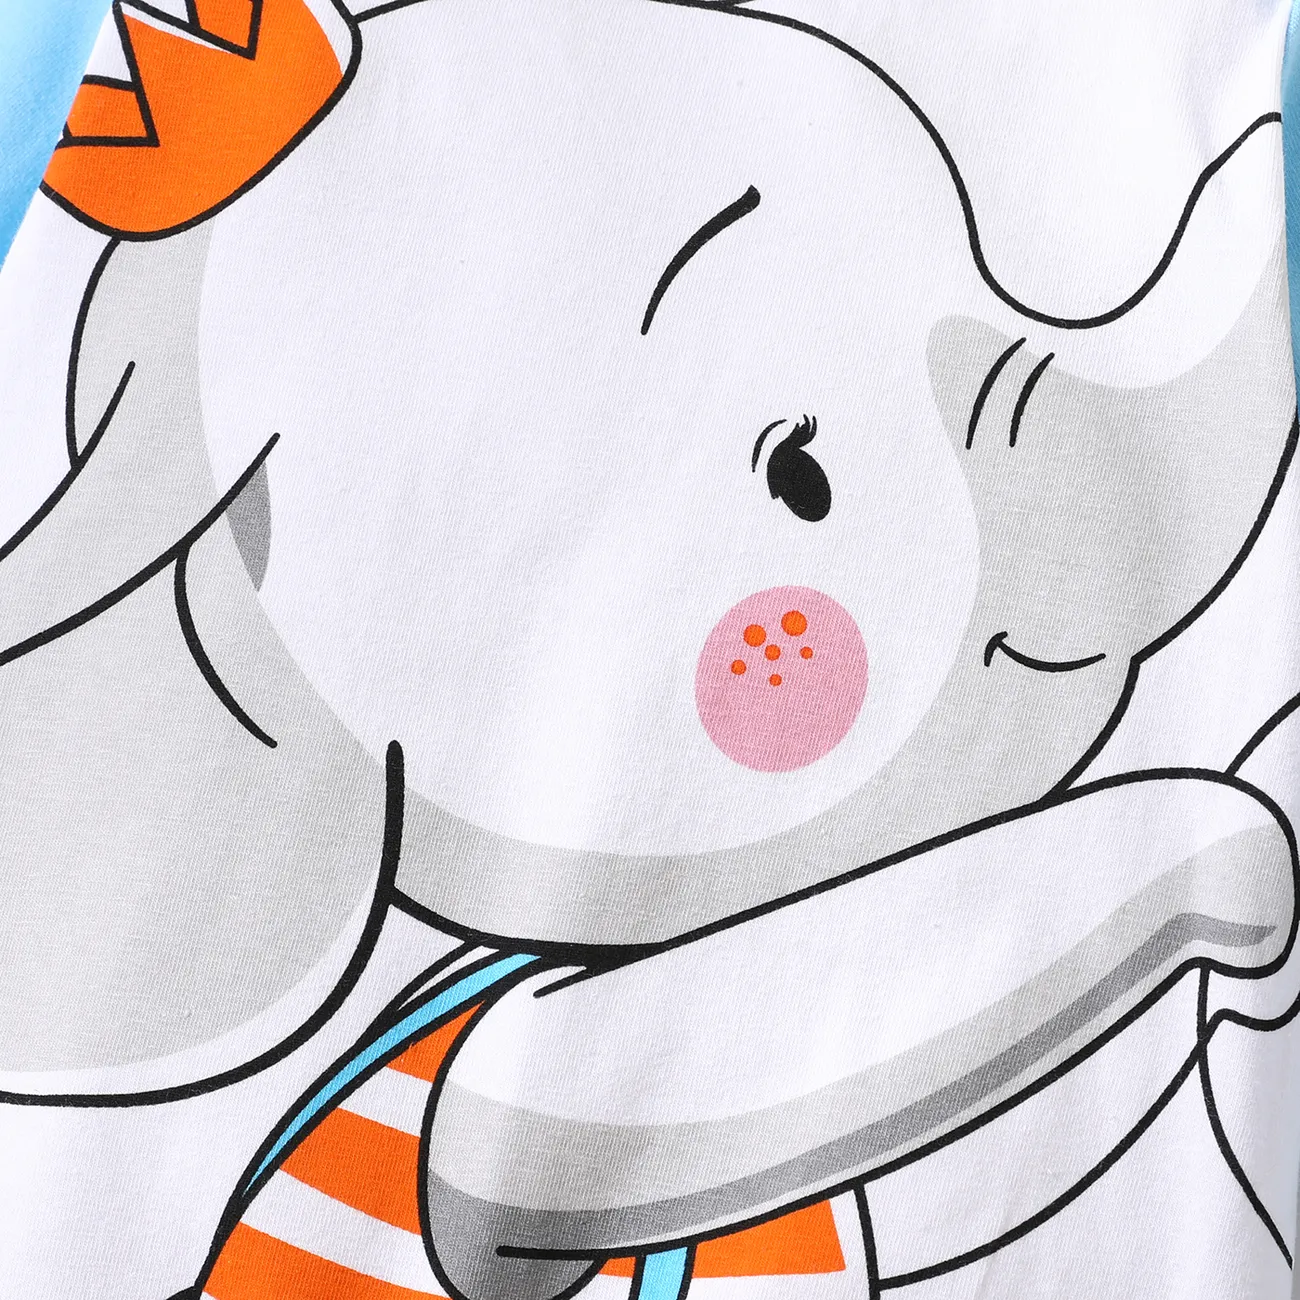 Baby Unisex Elefant Kindlich Langärmelig Baby-Overalls hellblau big image 1